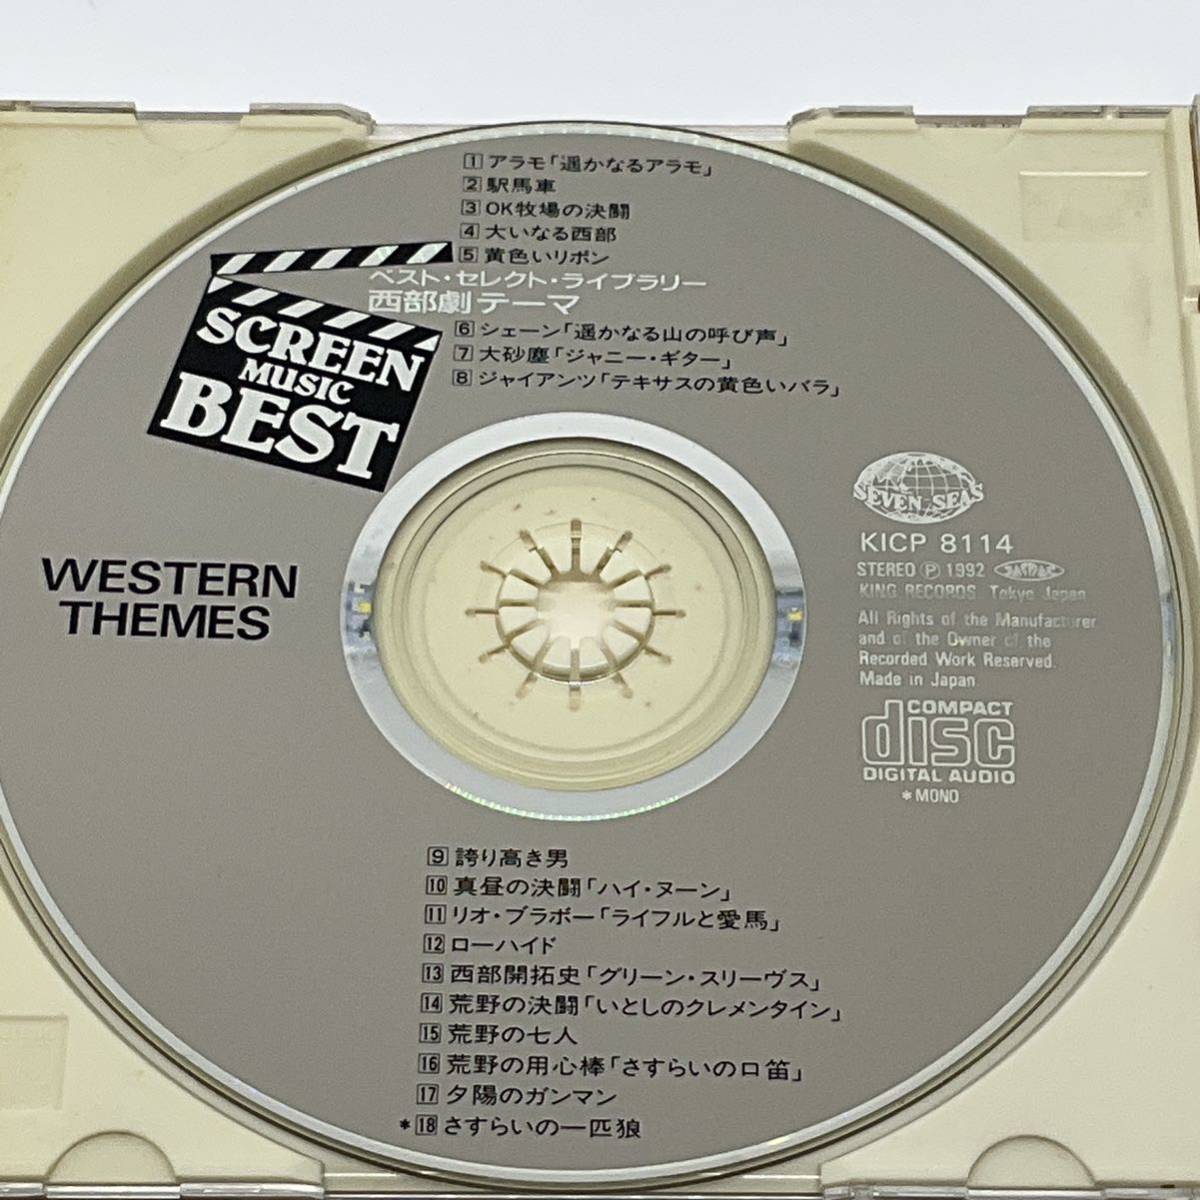  б/у с поясом оби CD вестерн Thema Screen Music Best vol.4 / KICP 8114